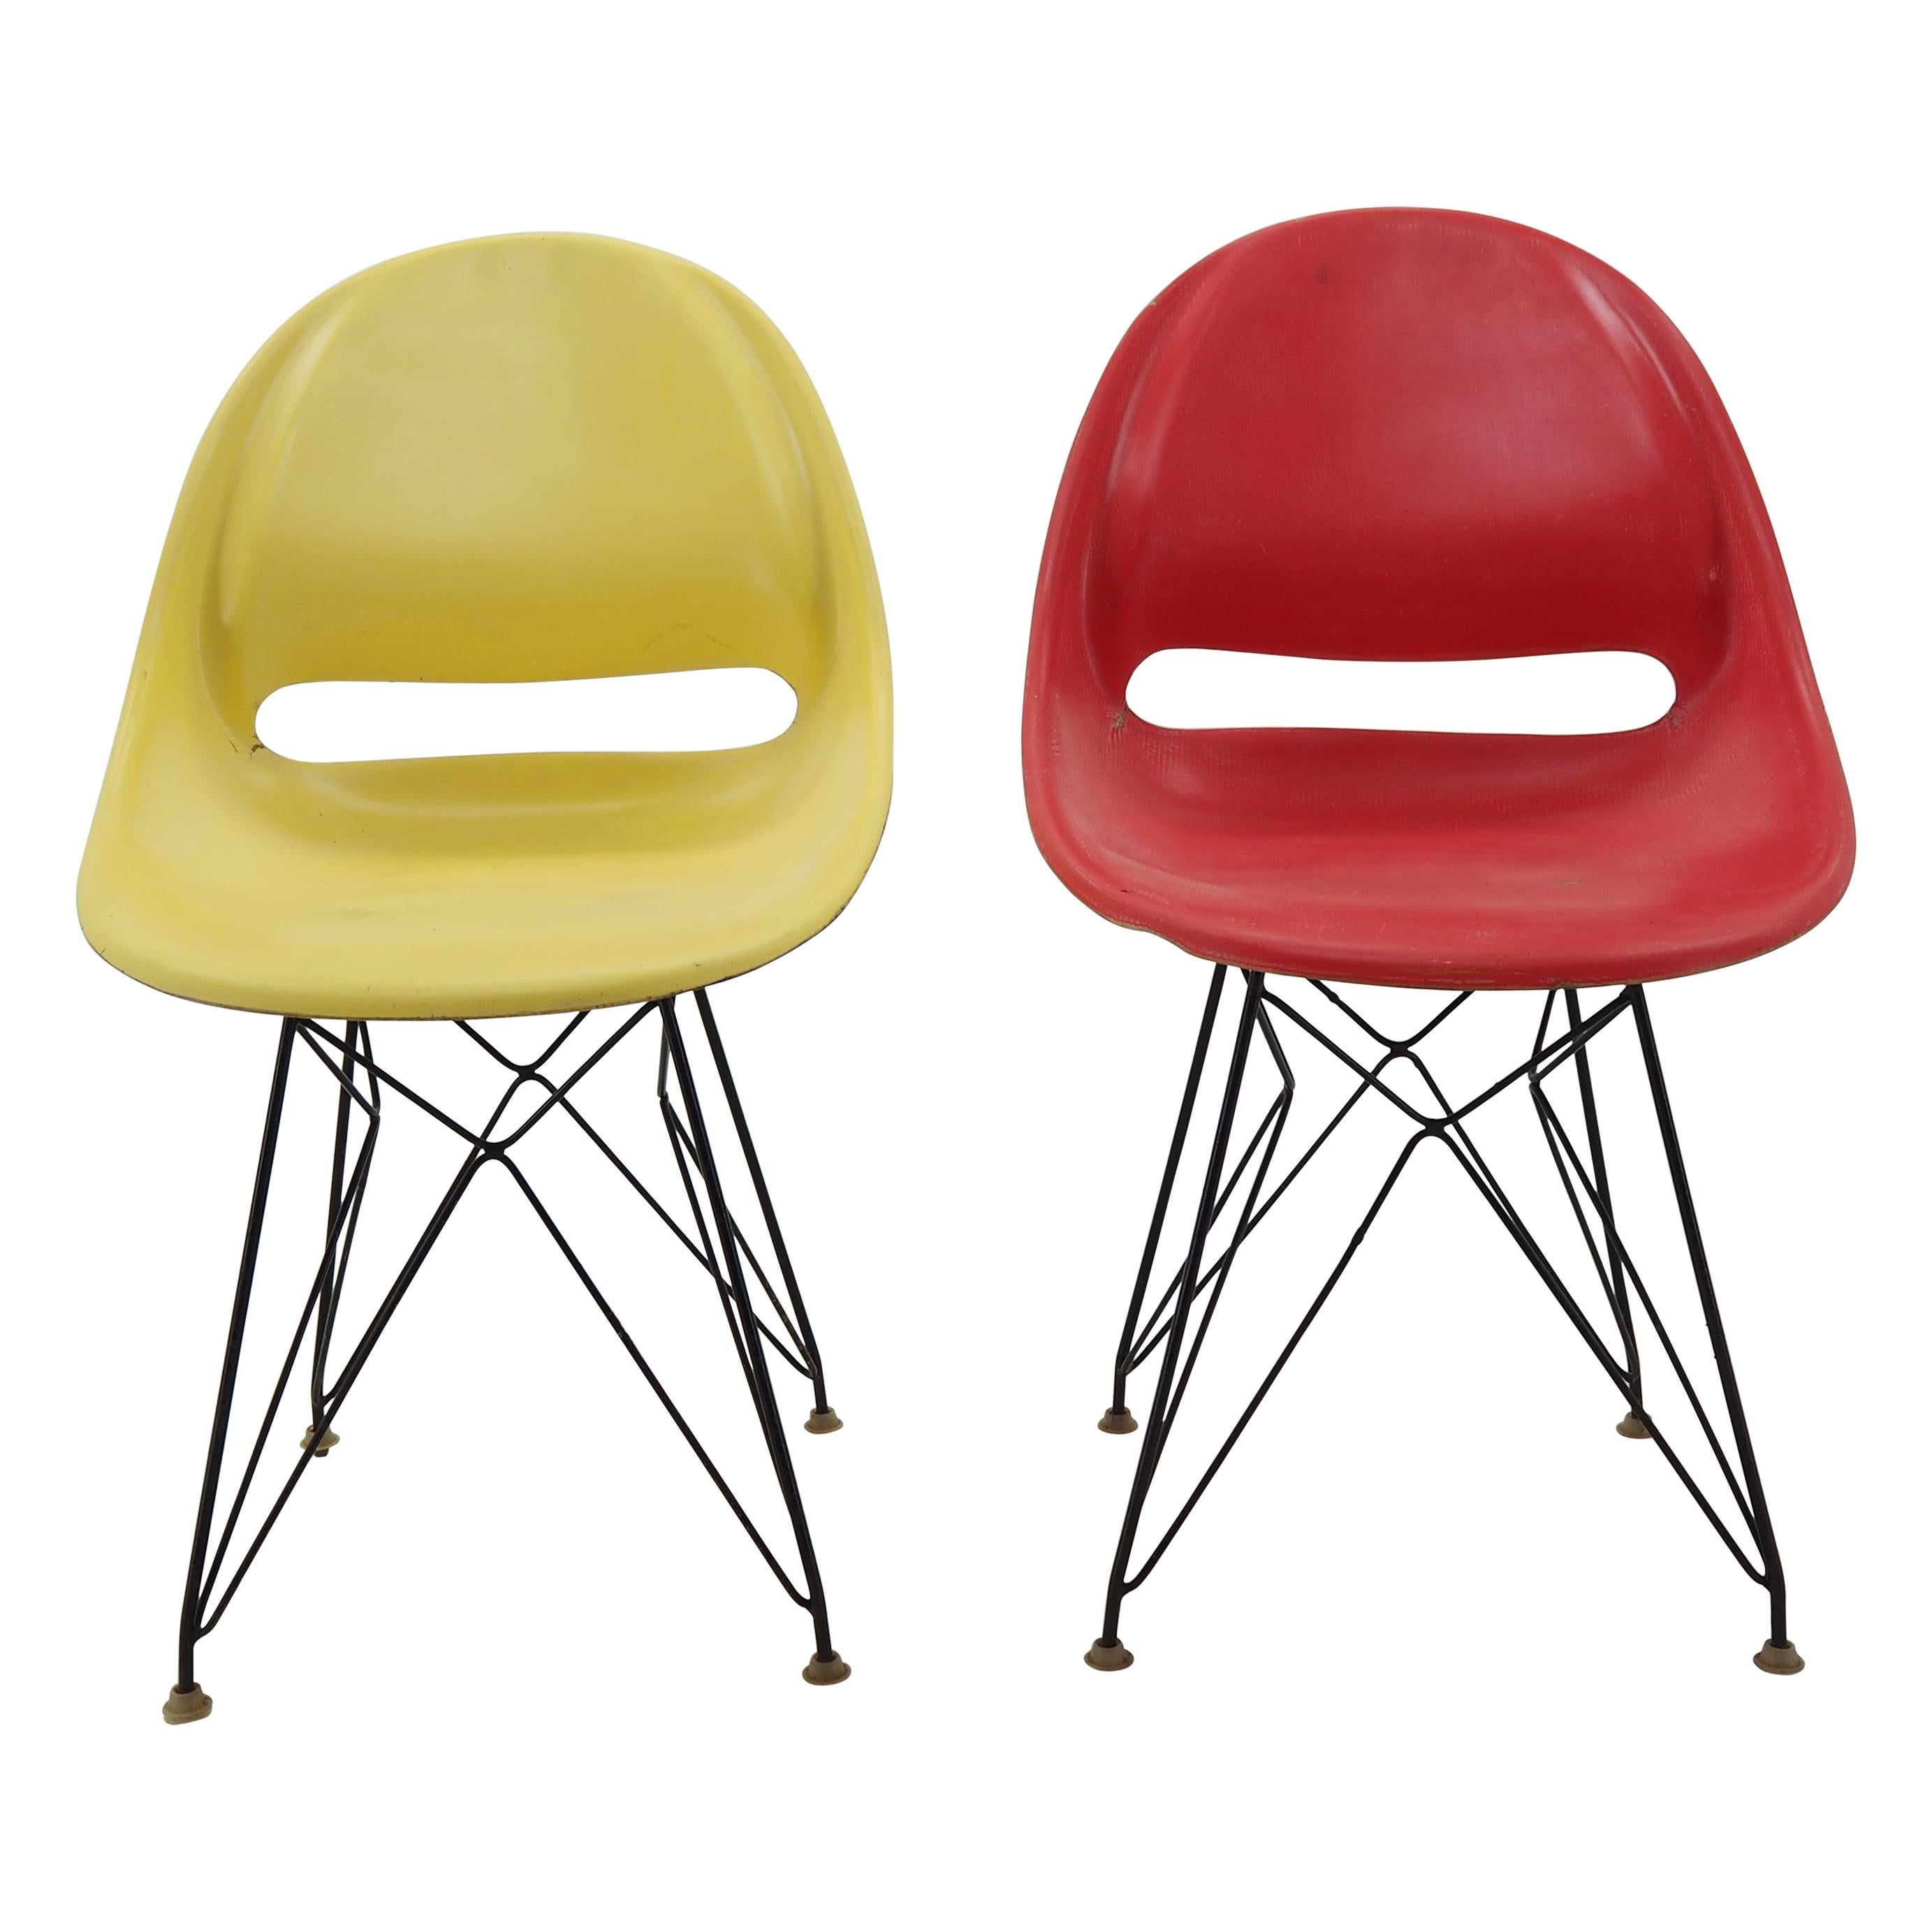 Pair of Midcentury Chairs, Vertex, by Miroslav Navratil, 1960s